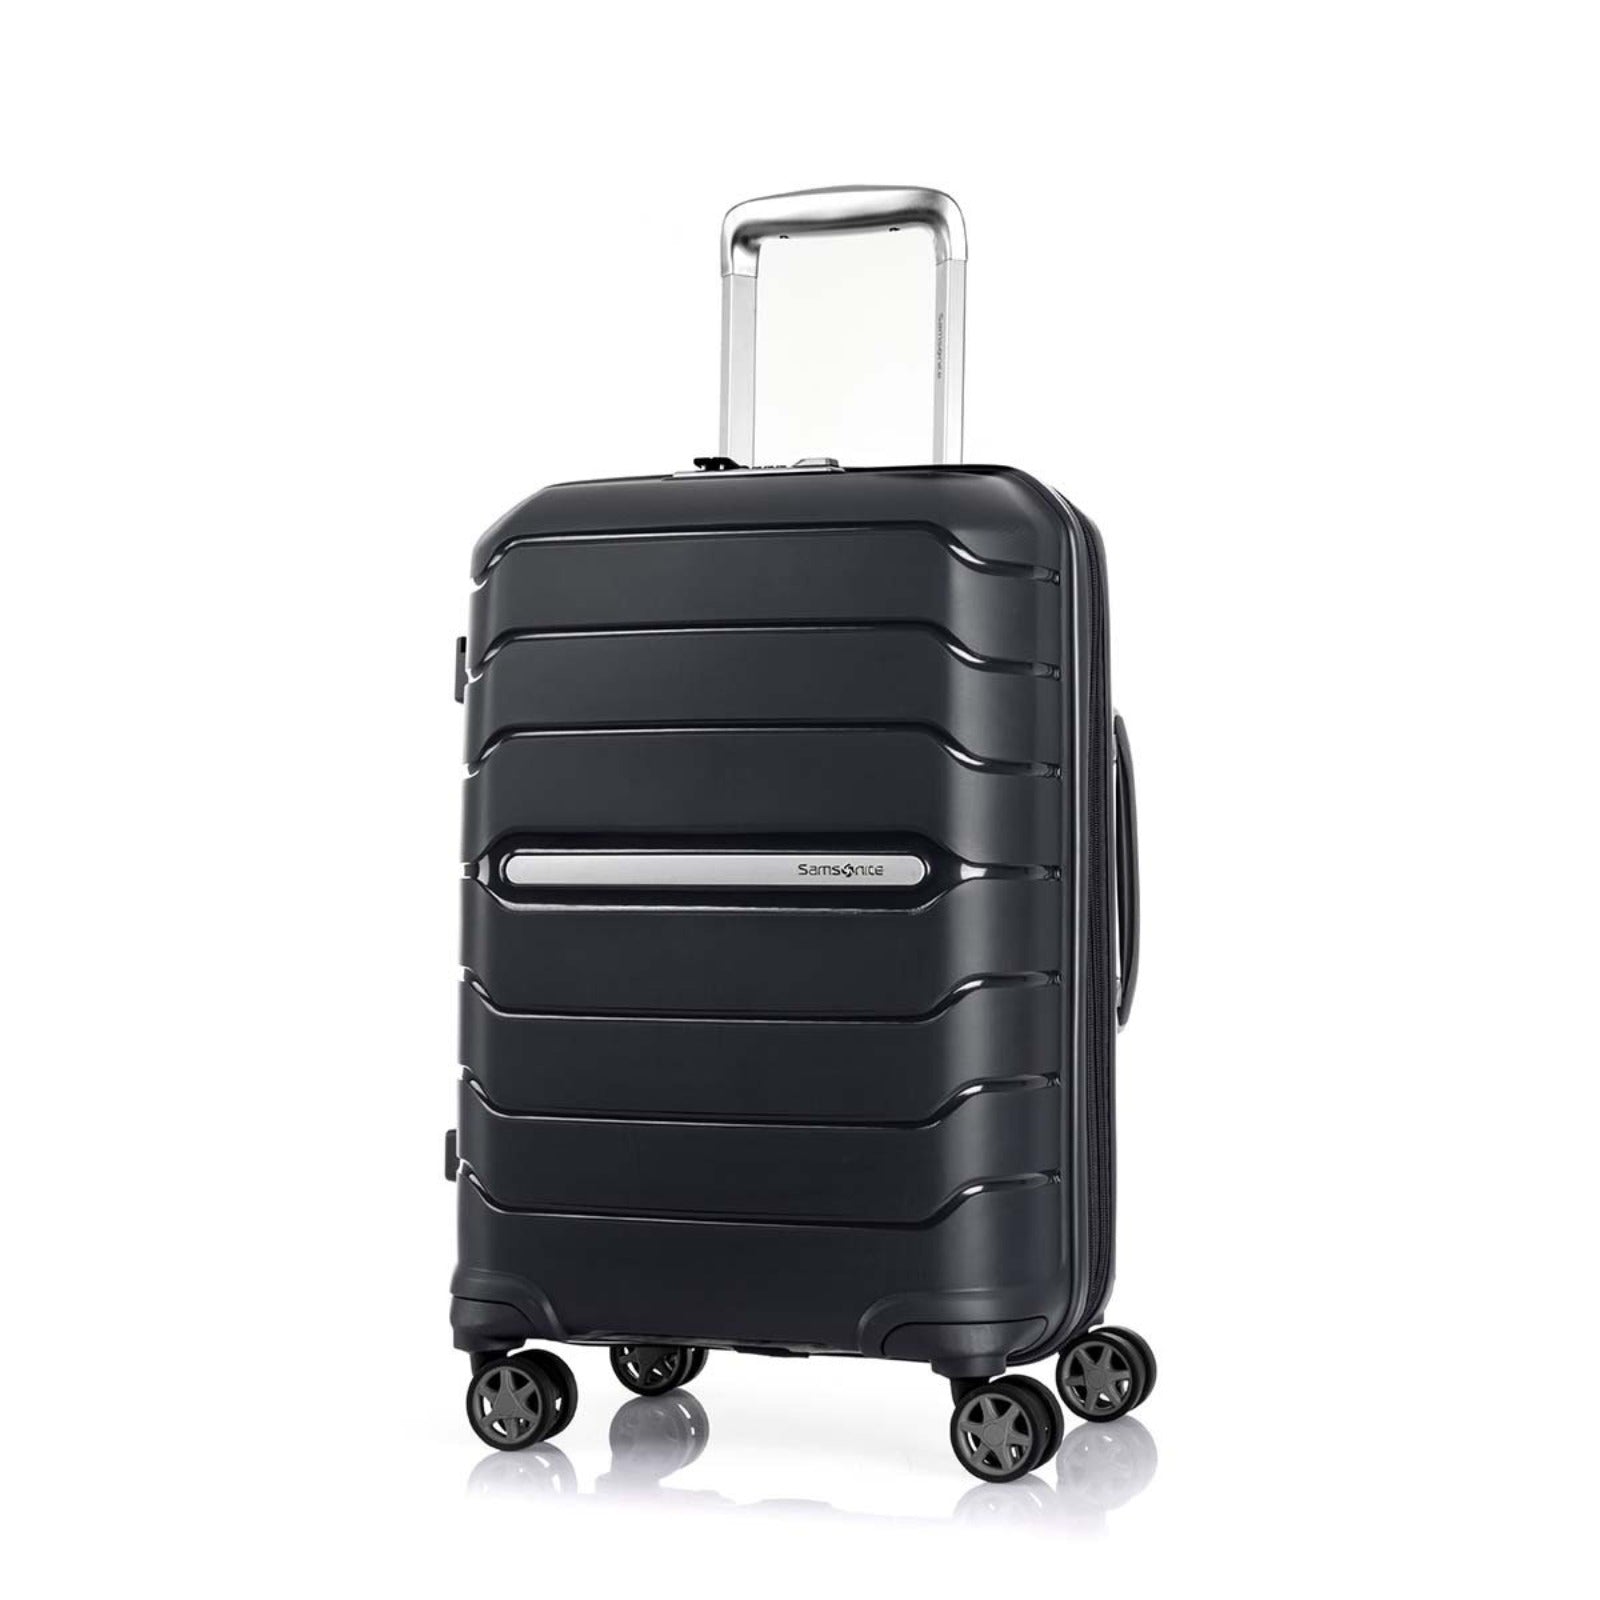 Samsonite_Oc2lite_55cm_Carry-On_Suitcase_Black_Front